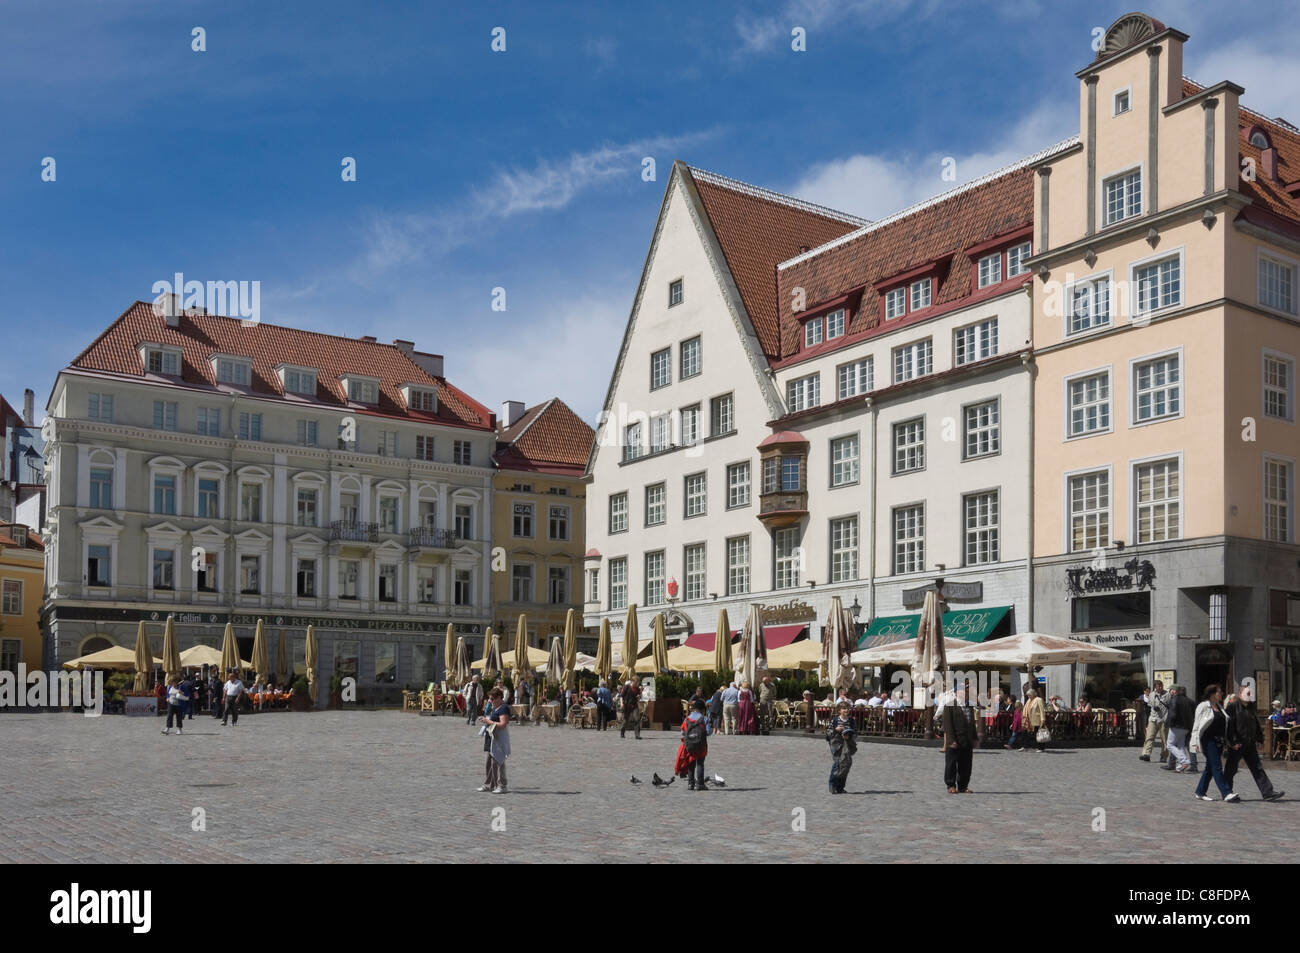 The Old Town Square, Tallin, Estonia Stock Photo